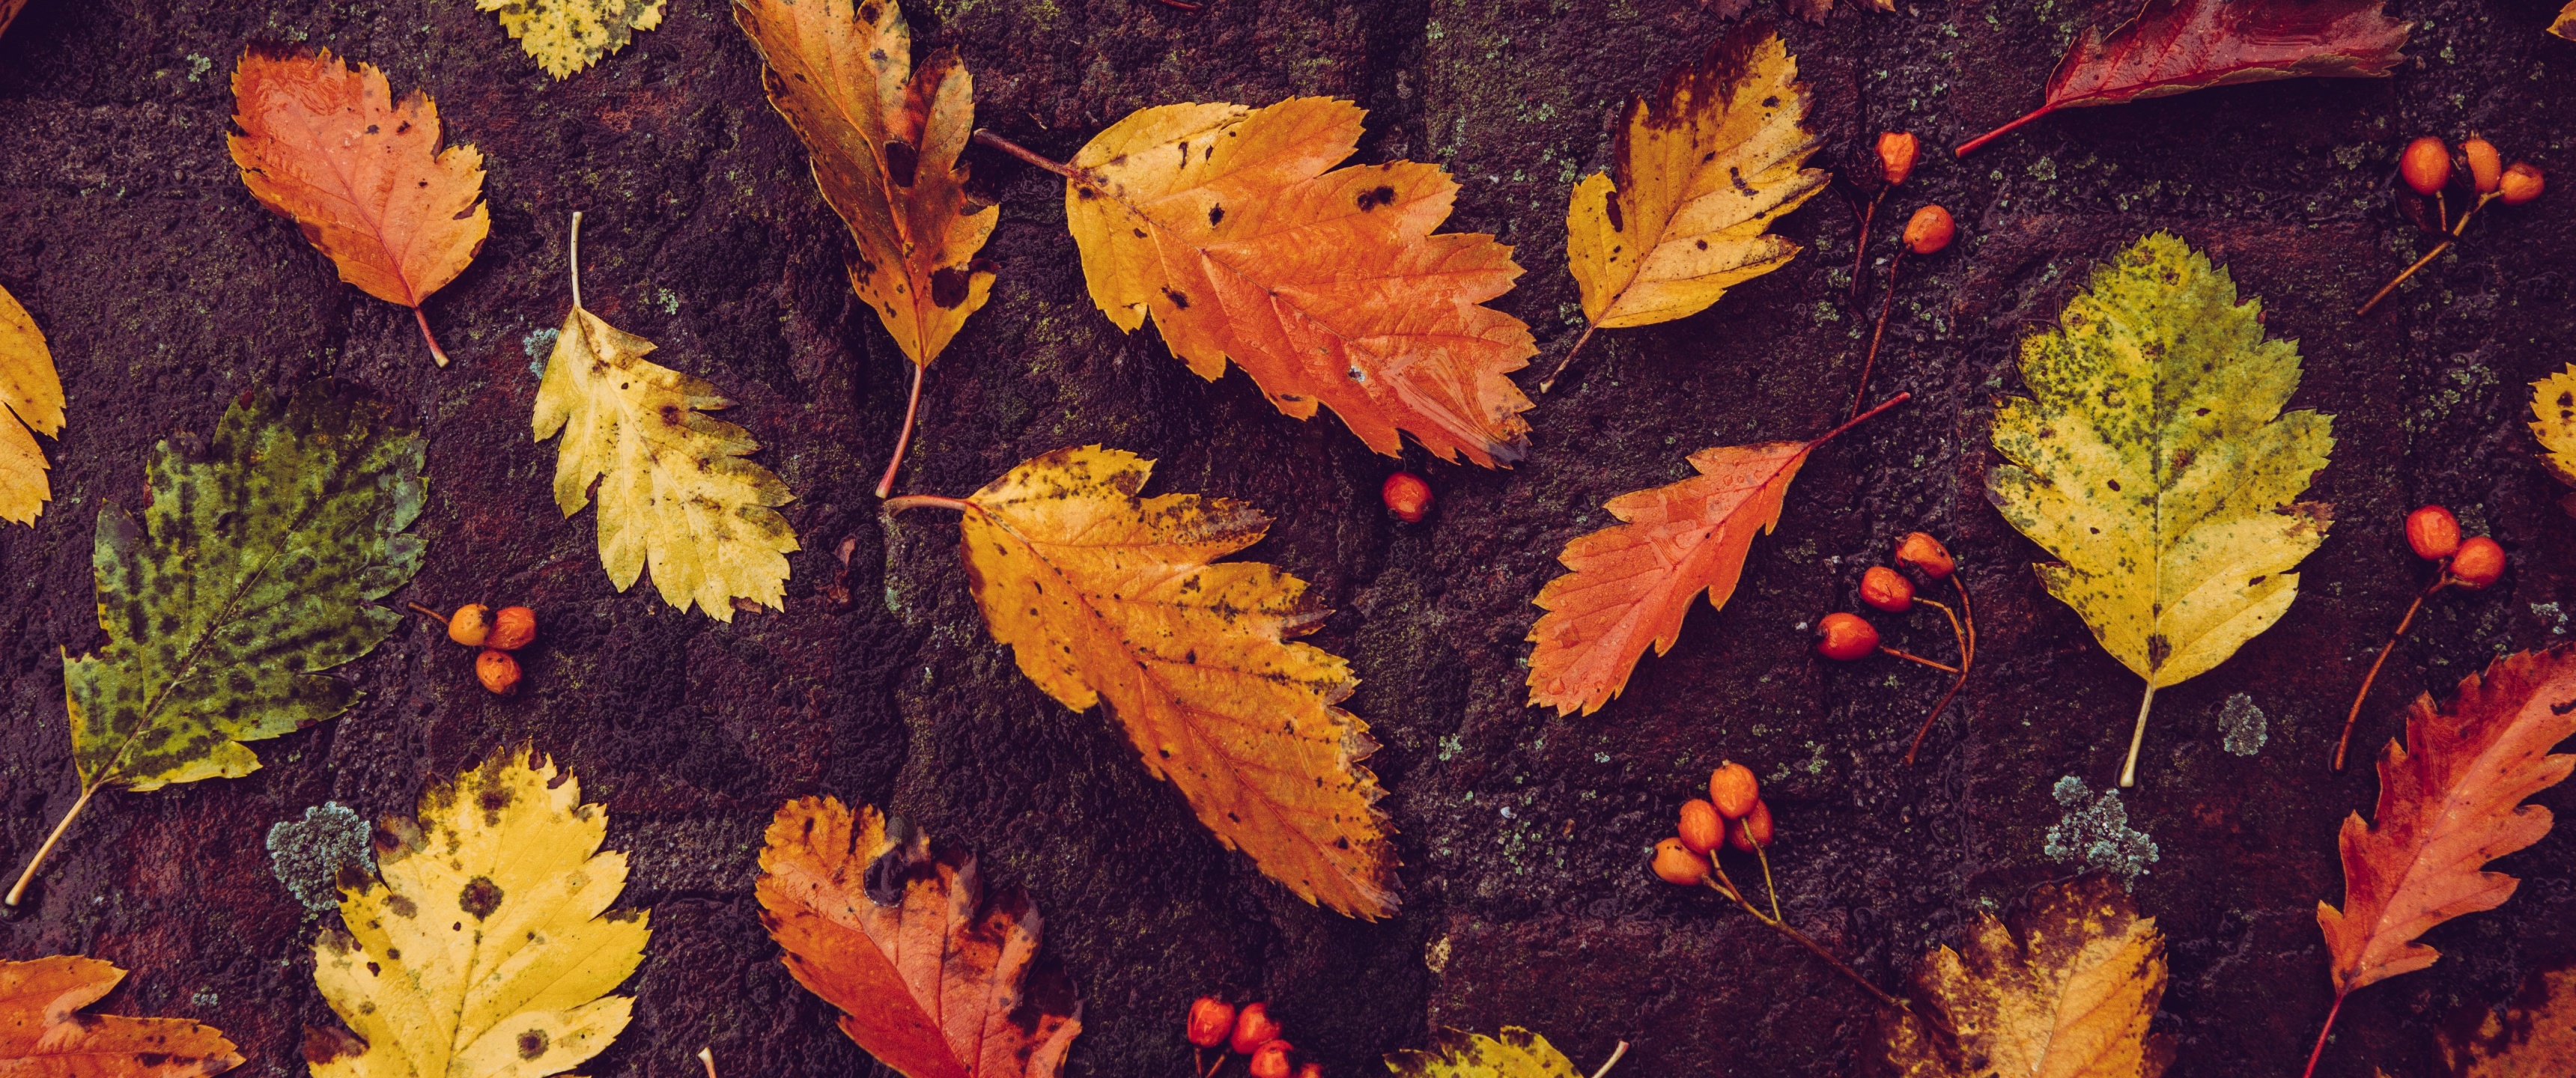 Autumn leaves Wallpaper 4K, Foliage, Fallen Leaves, Leaf Background, 5K, Nature